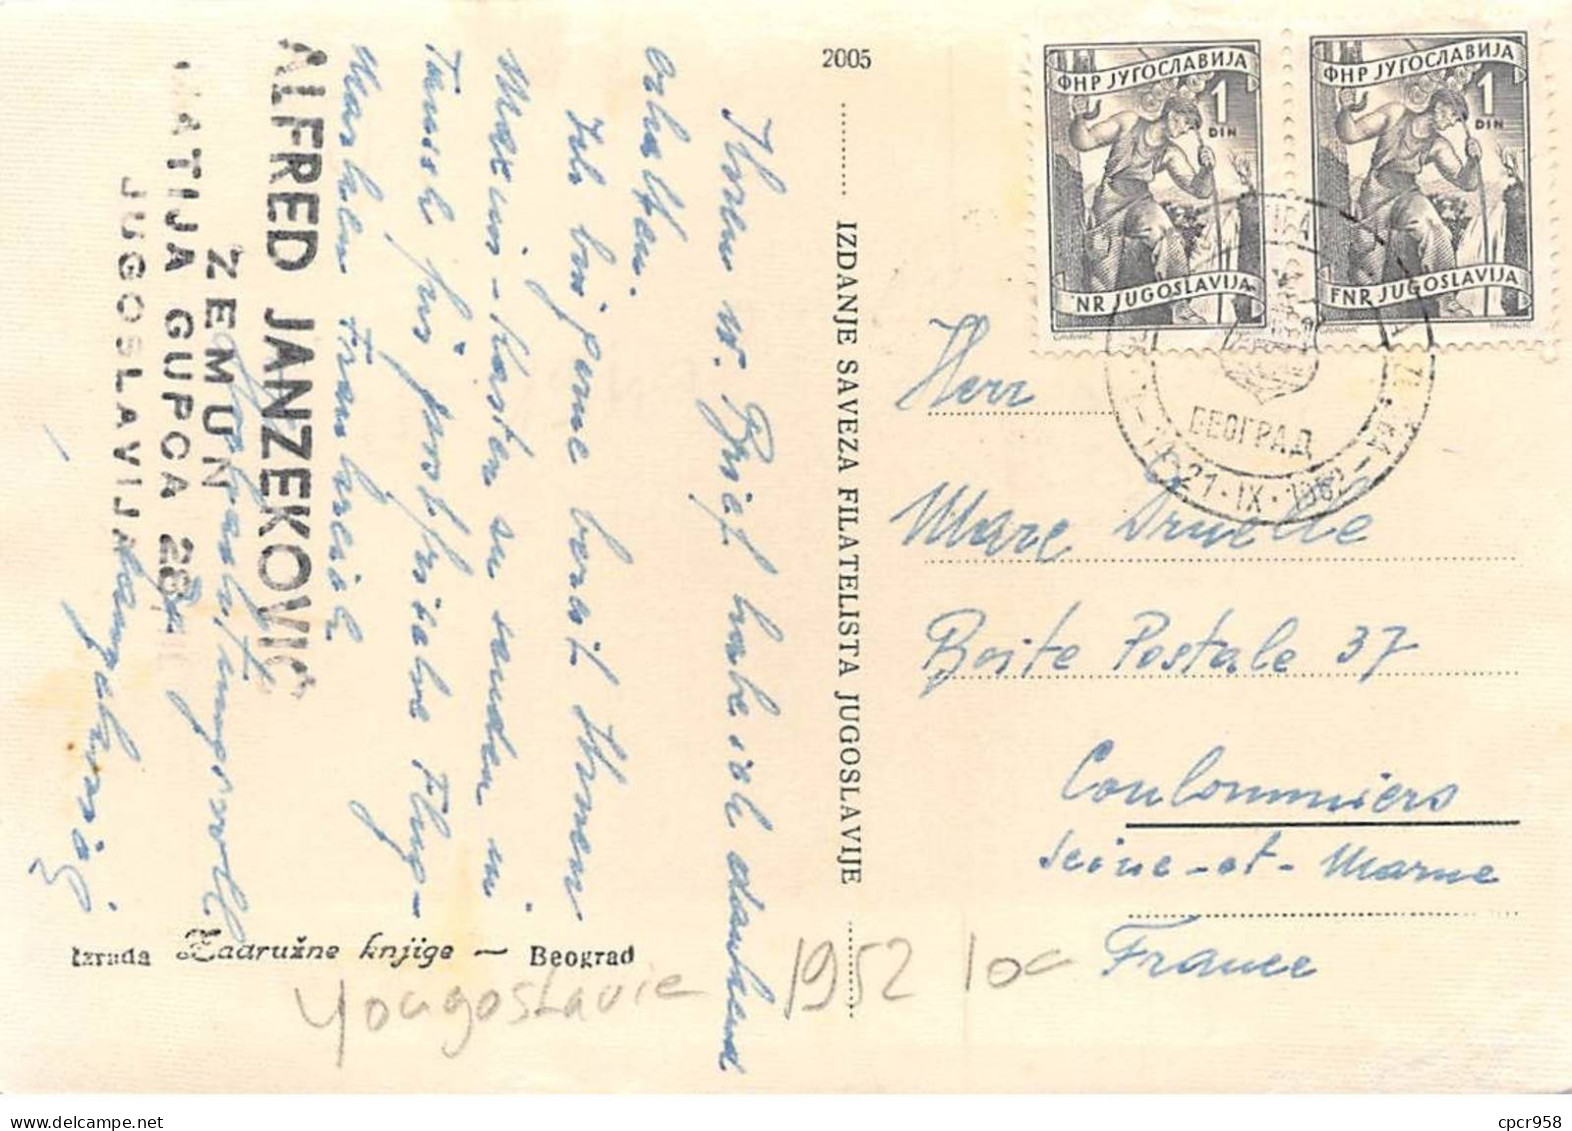 YOUGOSLAVIE.Carte Maximum.AM14109.1952.Cachet Izlozba.Exposition Philatélique De Belgrade - Used Stamps